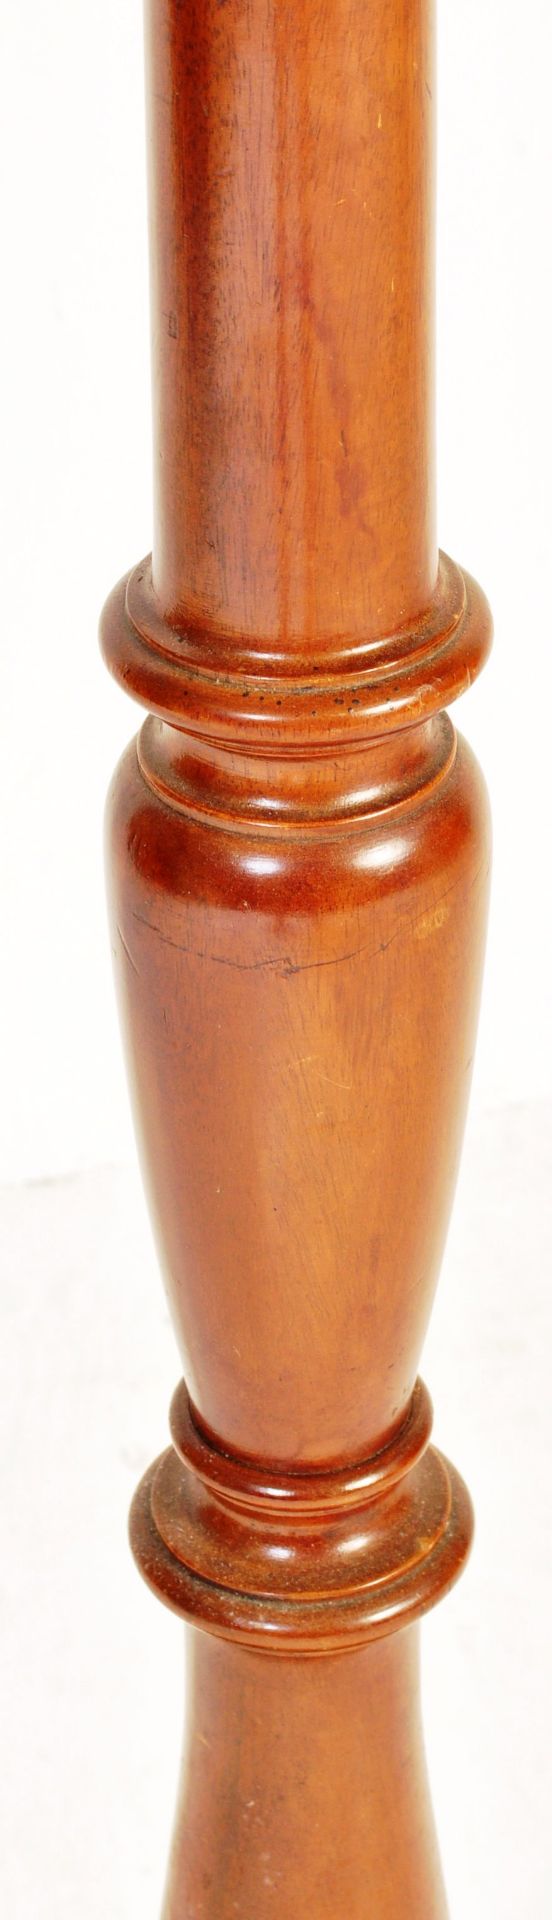 EARLY 20TH CENTURY MAHOGANY STANDARD LAMP - Image 6 of 8